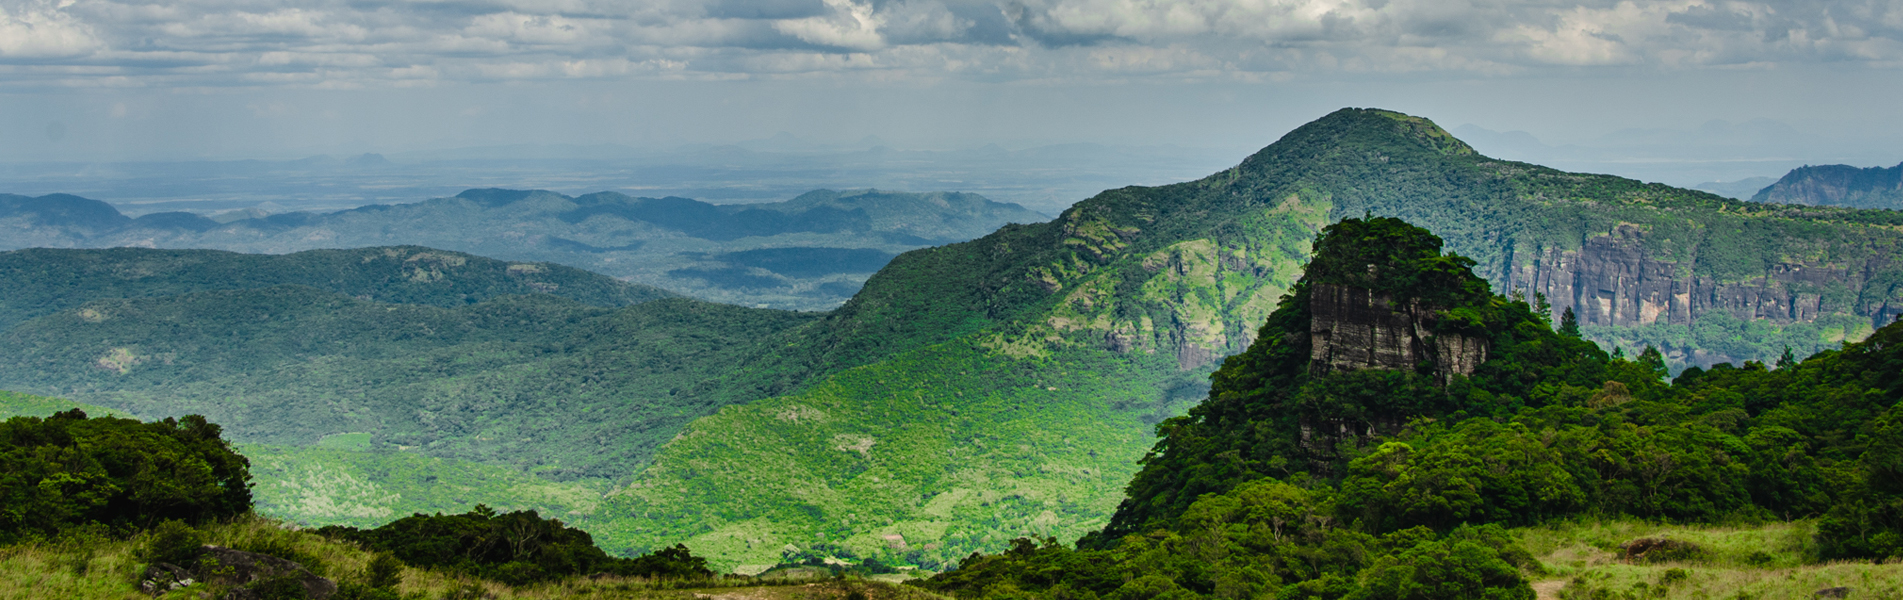 View from Riverstone, Matale Sri Lanka